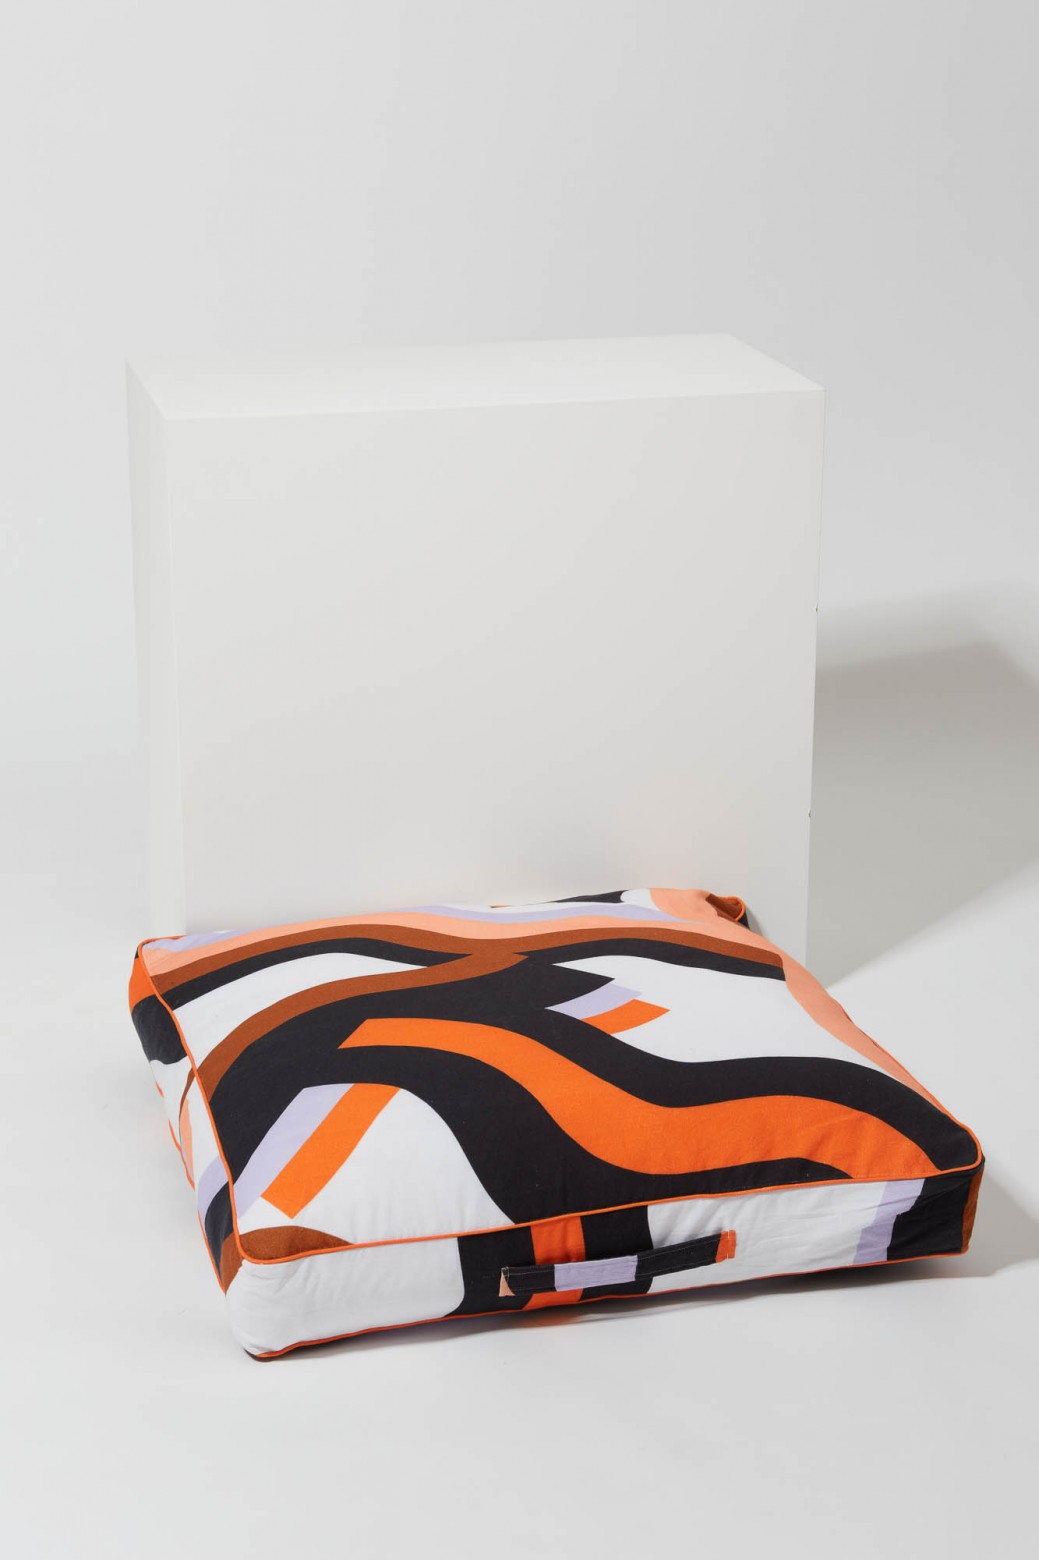 103 - Baignade Orange Floor Cushion 2x